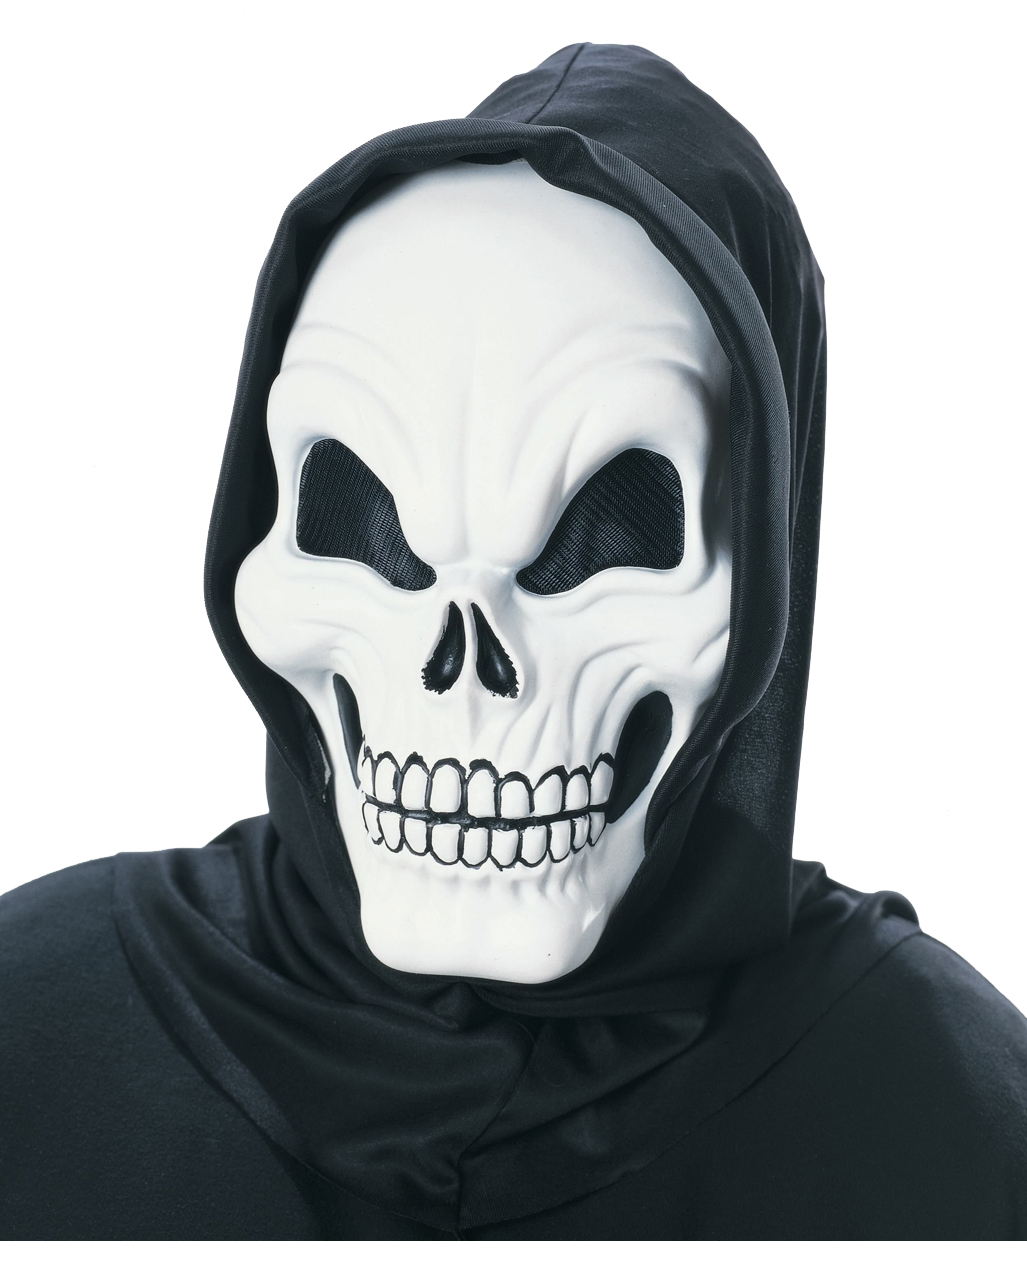 Scary Skeleton Mask for Halloween | Horror-Shop.com